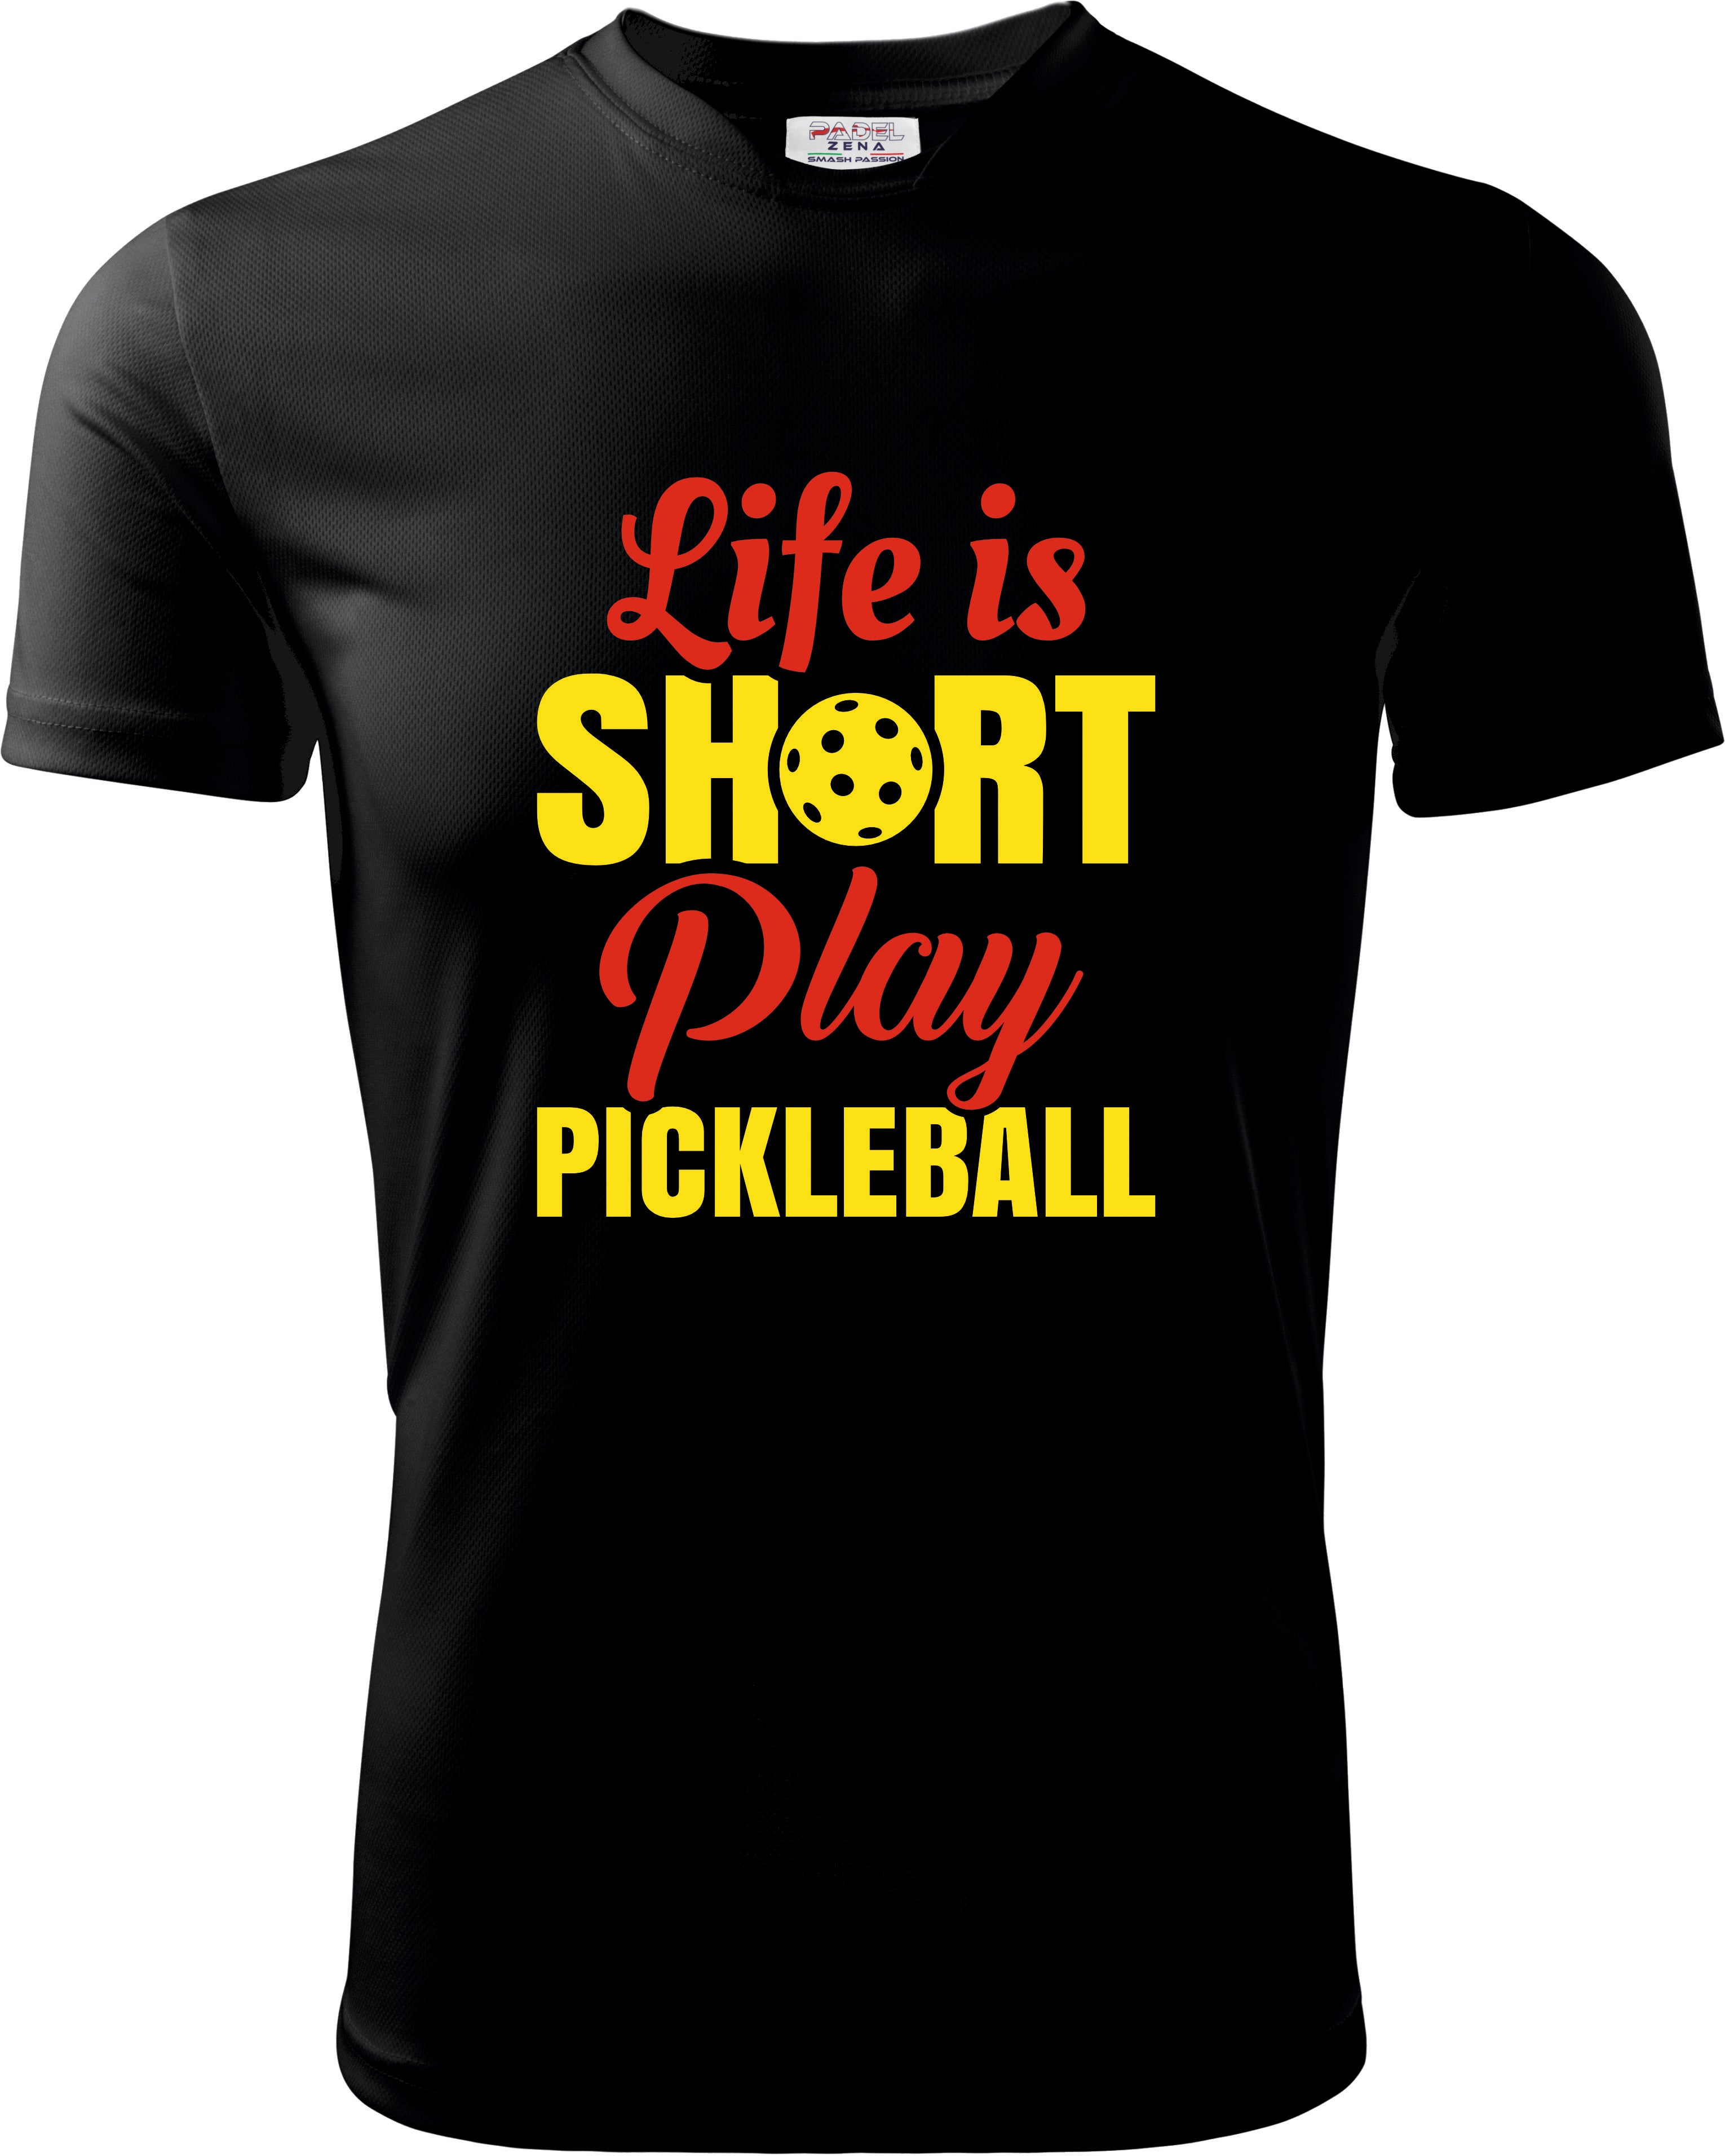 T-Shirt Pickleball - LIFE IS SHORT